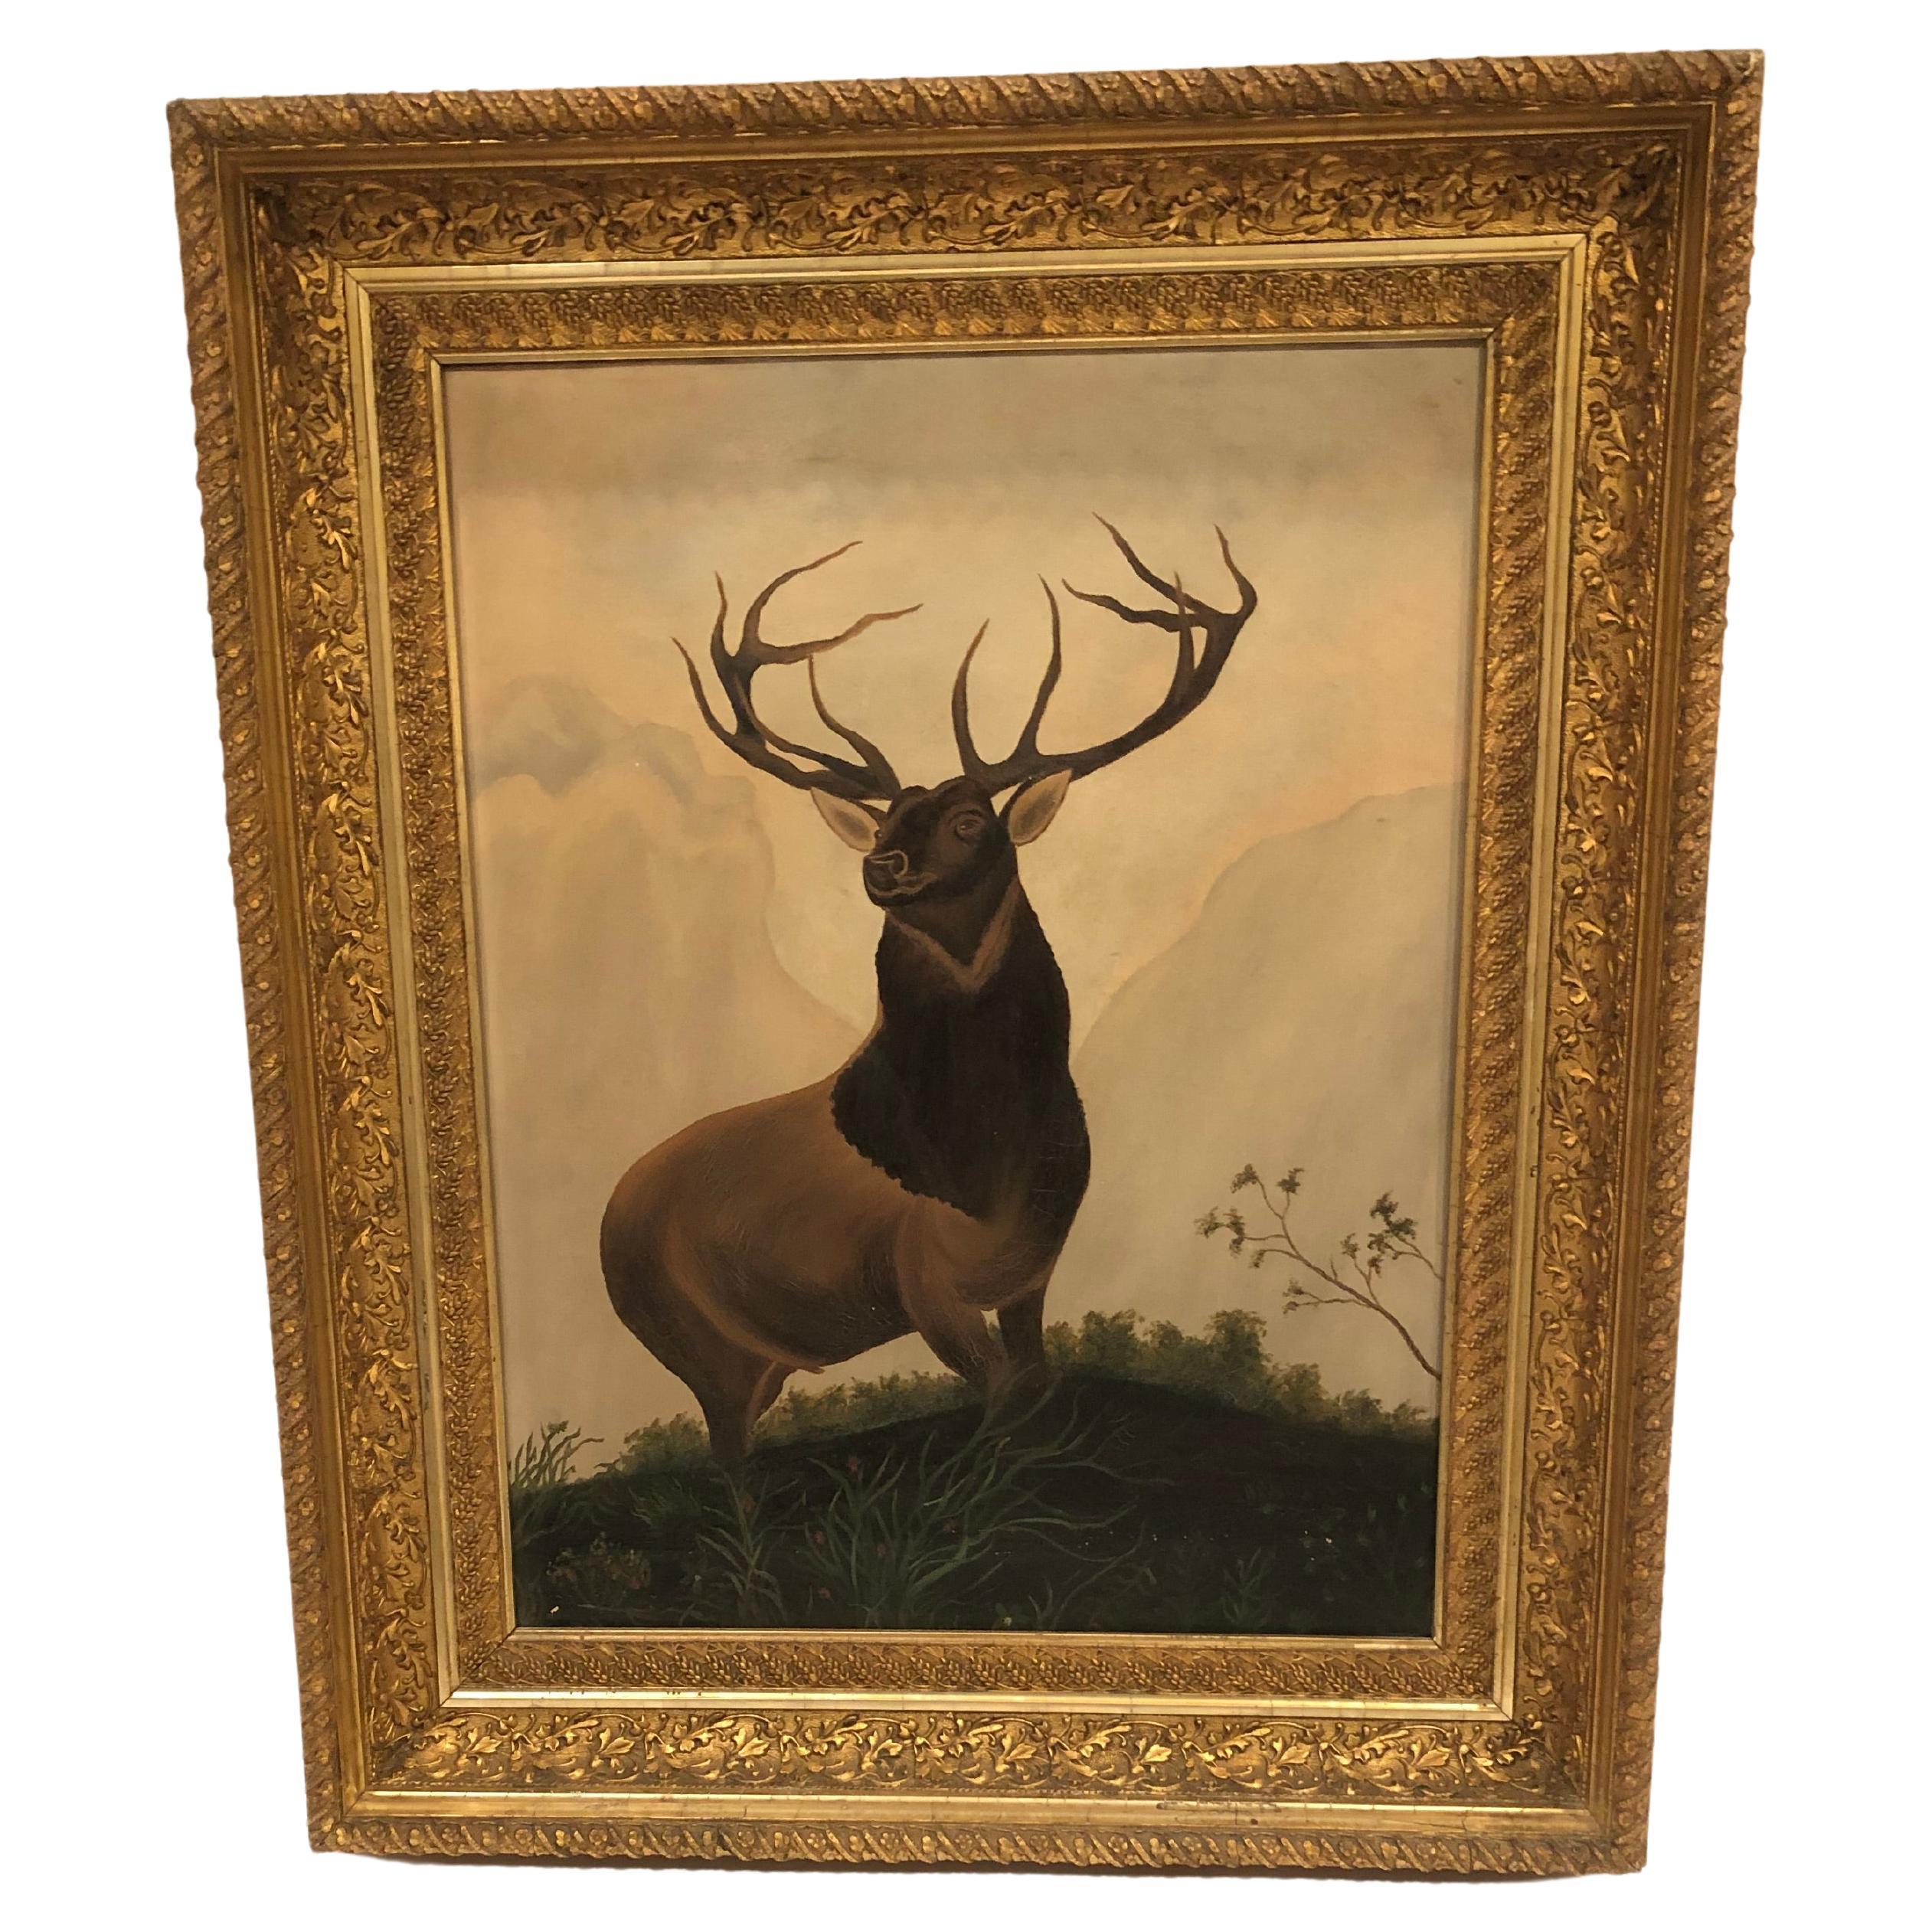 Masculine Moody Original 19th Century Painting of a Proud Buck Deer